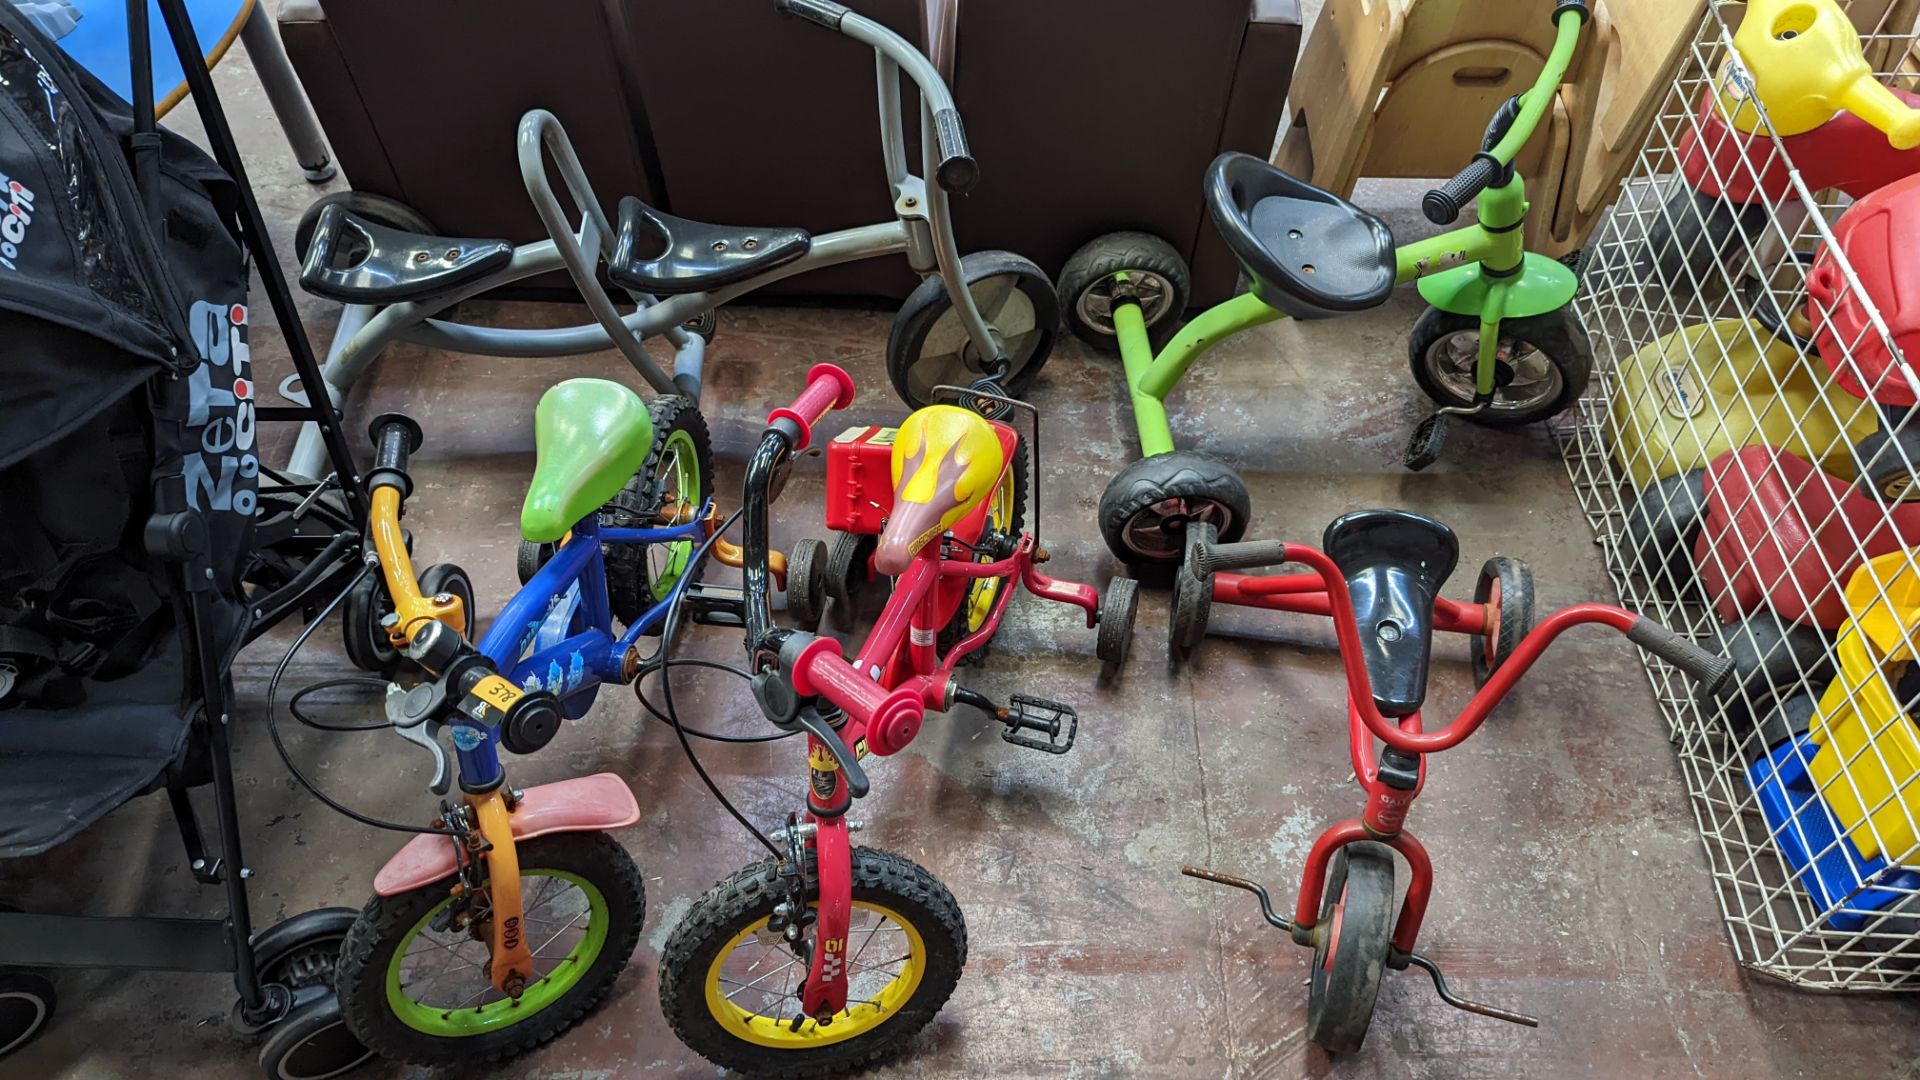 5 off children's 3-wheel bikes, including one tandem bike